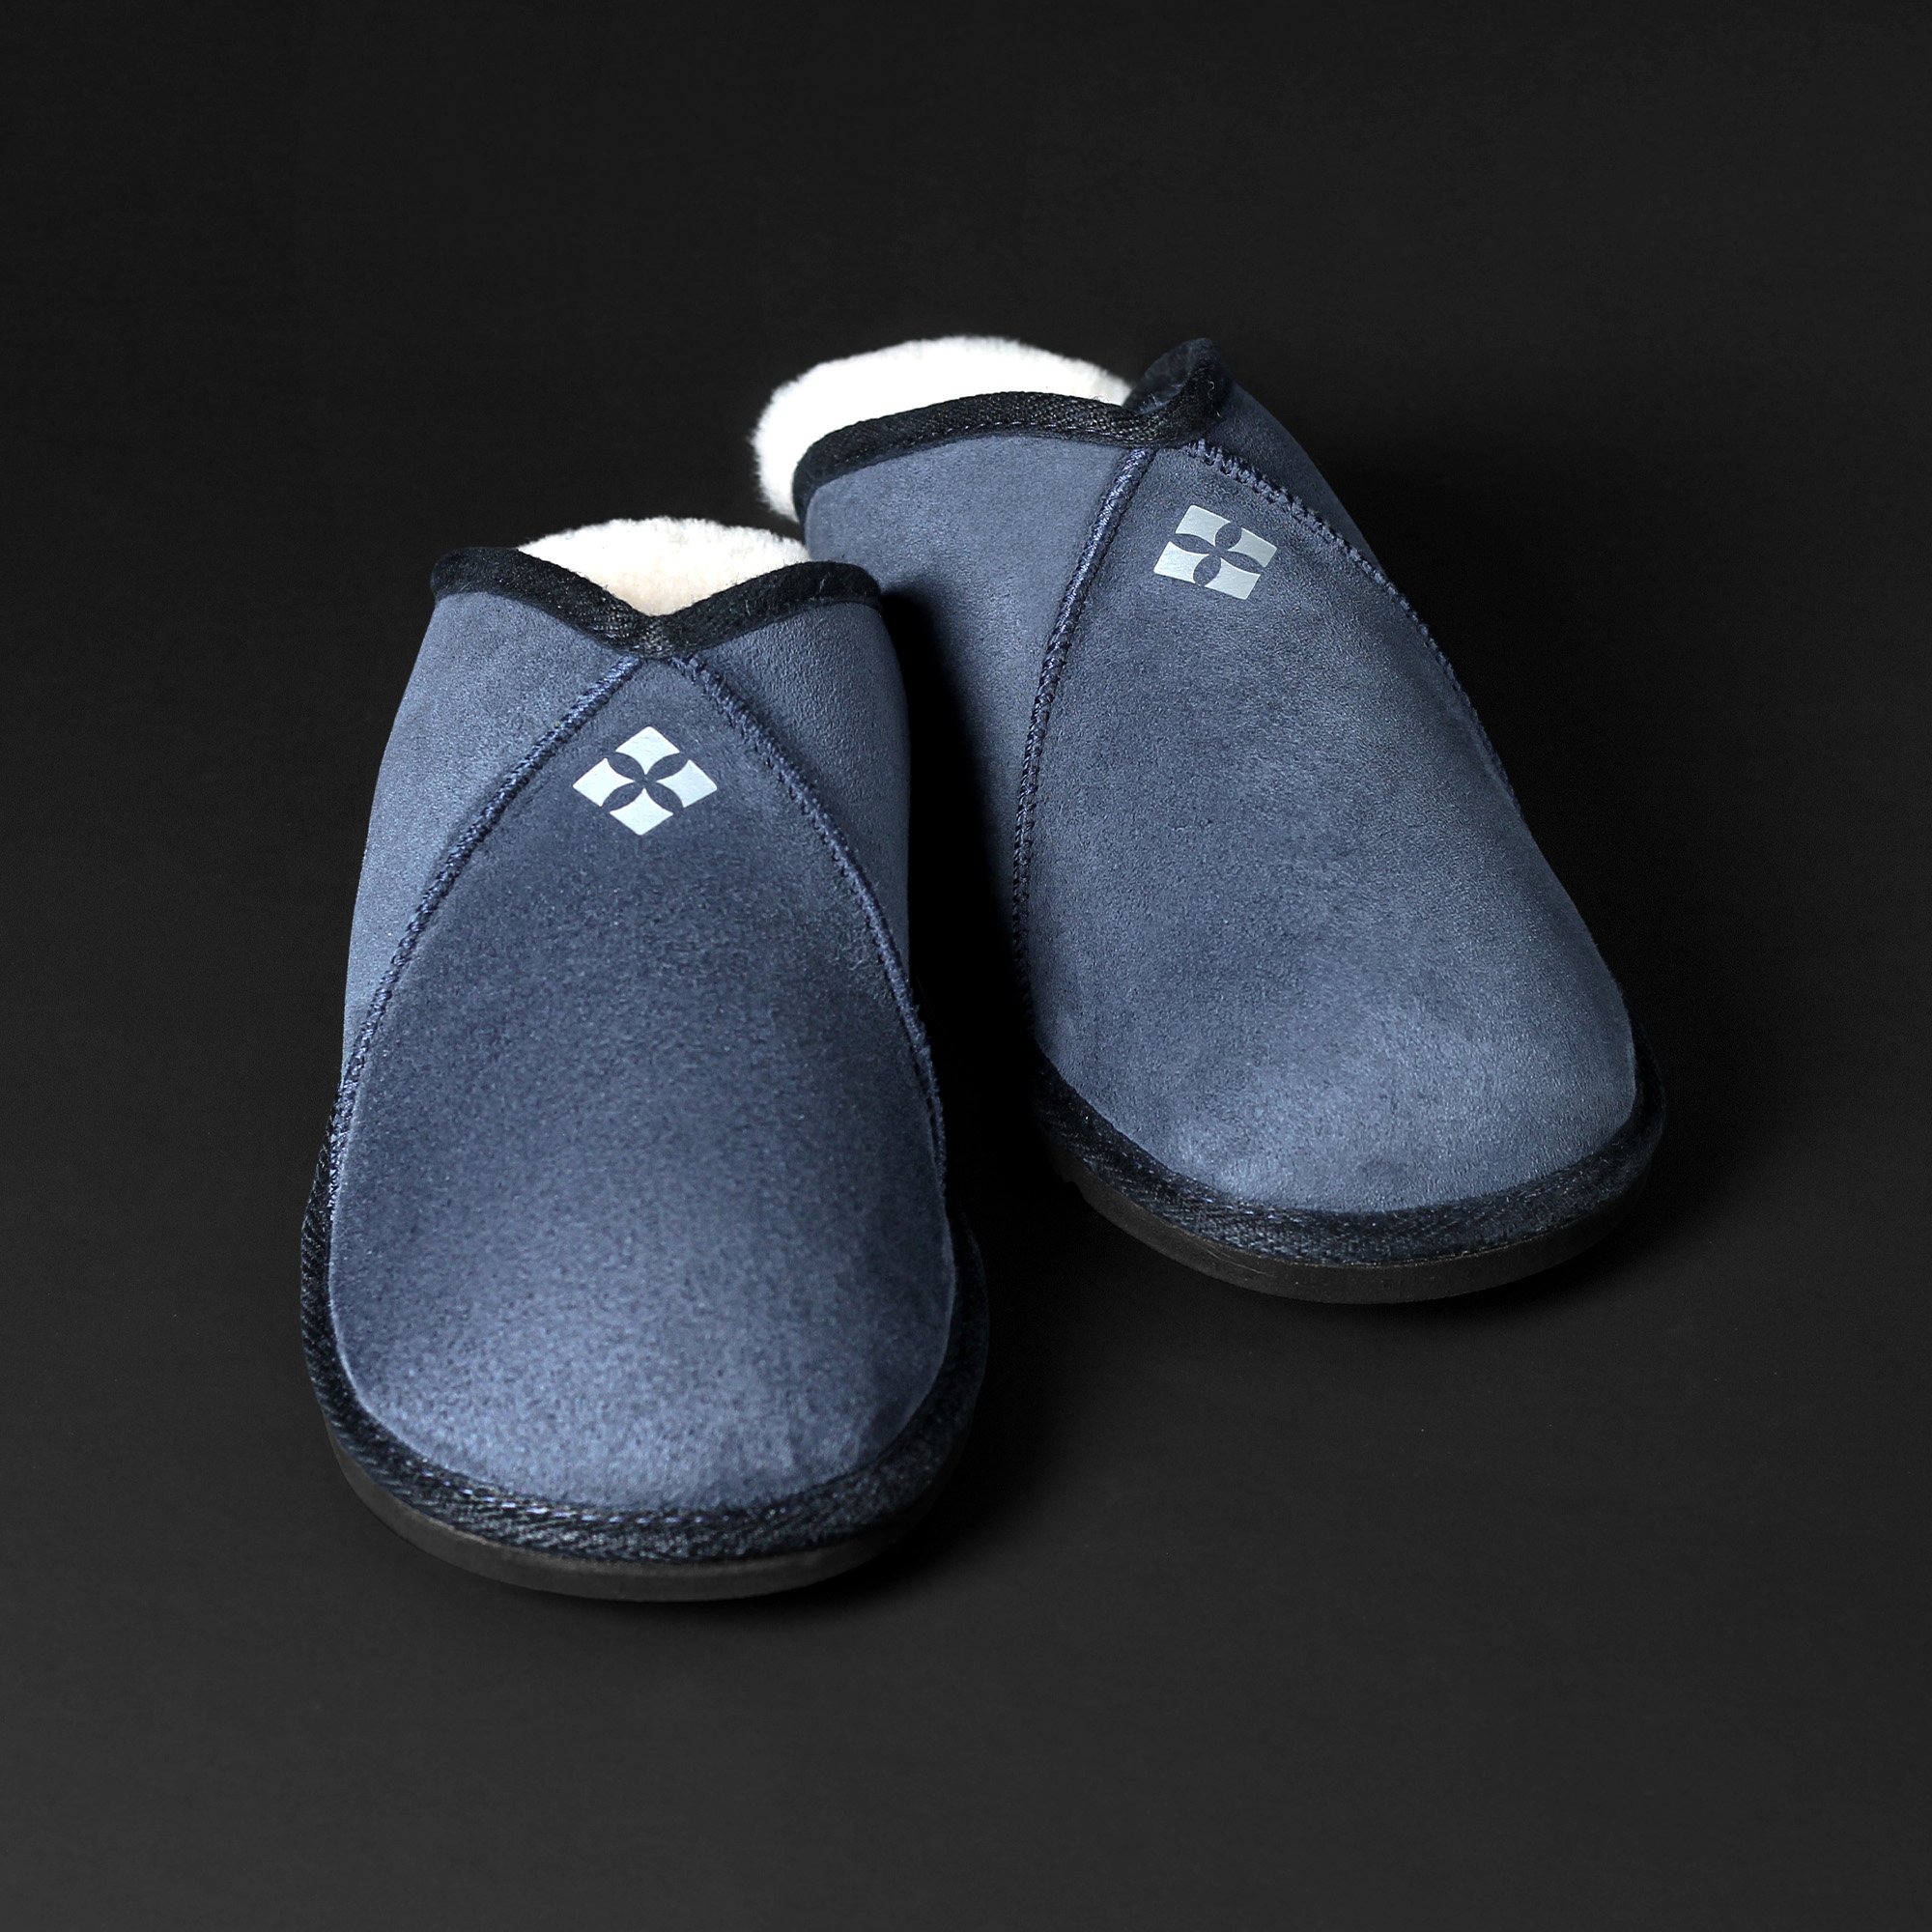 xanthe anna_sheepskin slippers_blue1.jpg